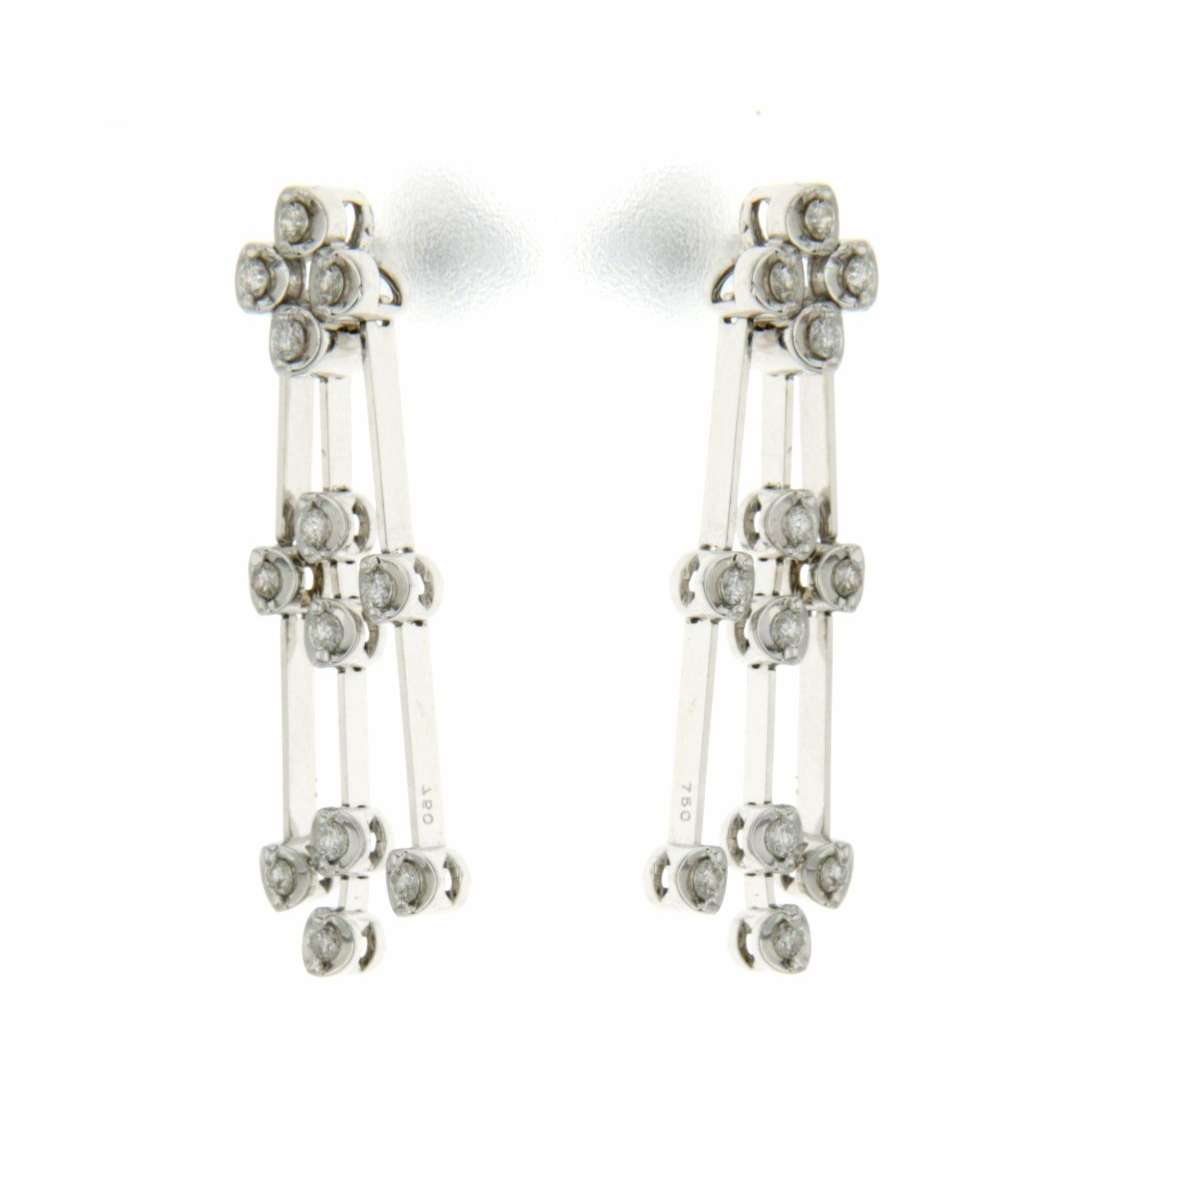 Dangling earrings 0.45 carats diamonds G Color VS1 Clarity